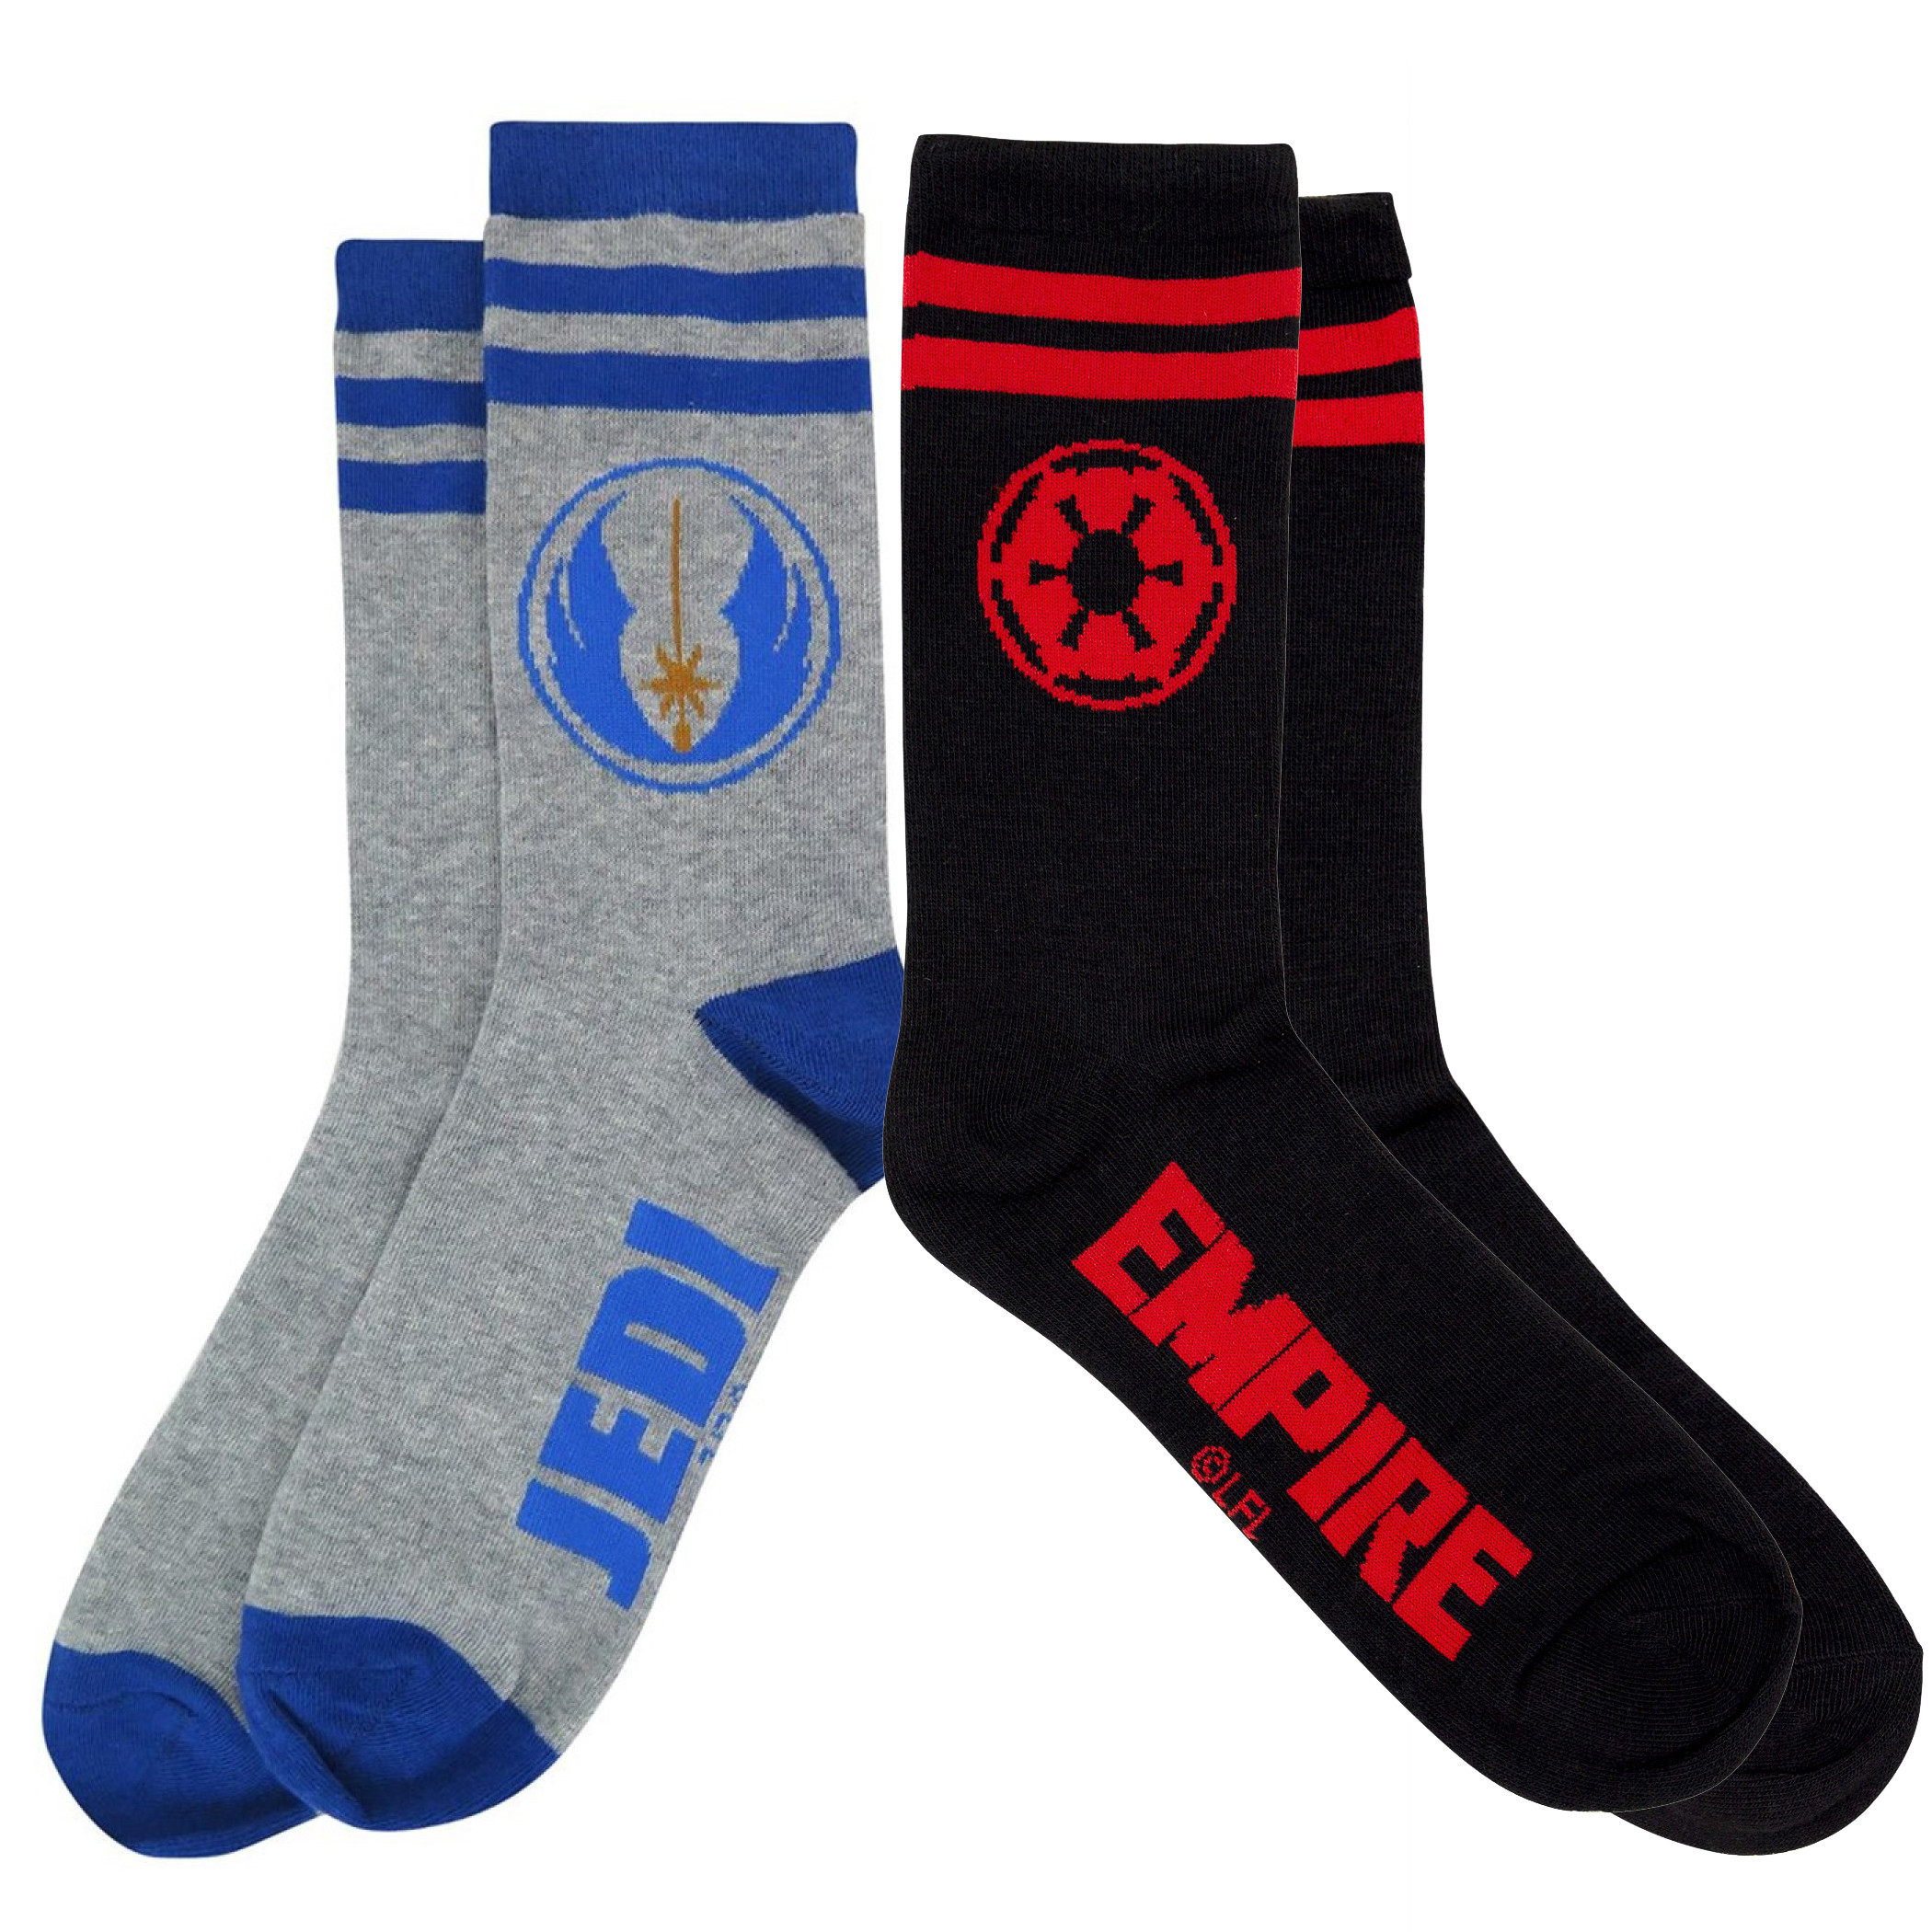 Star Wars Jedi and Empire Symbols Crew Socks 2-Pair Pack